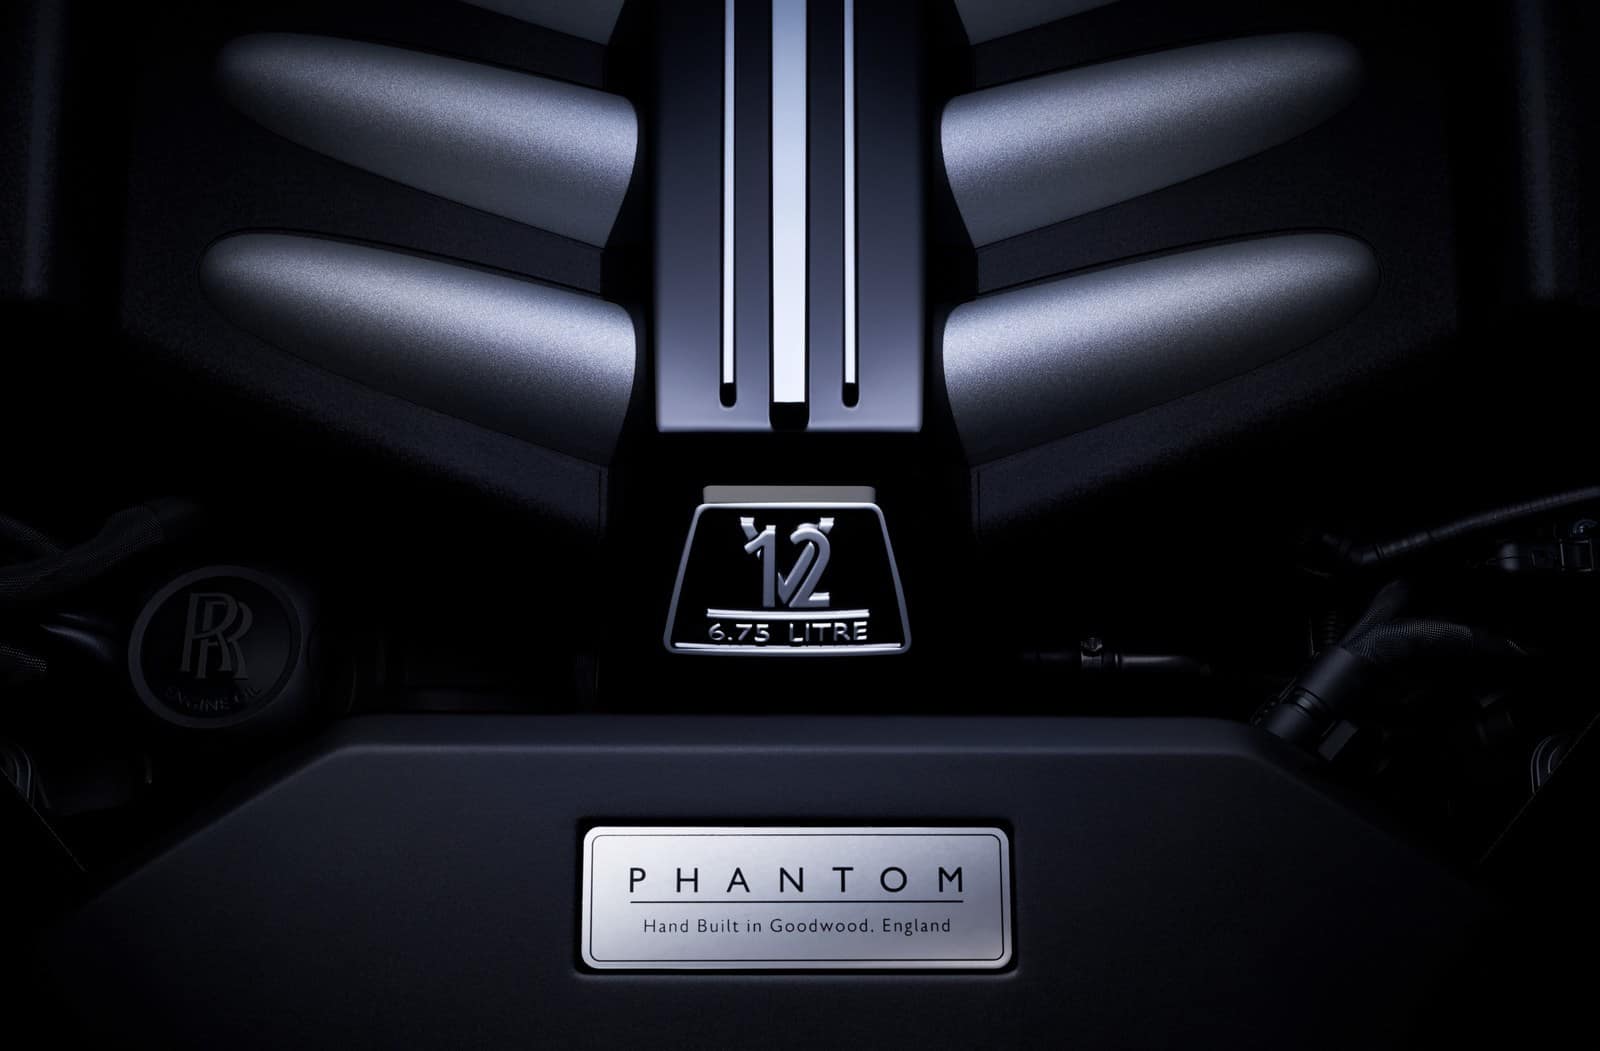 Rolls-Royce Phantom 19